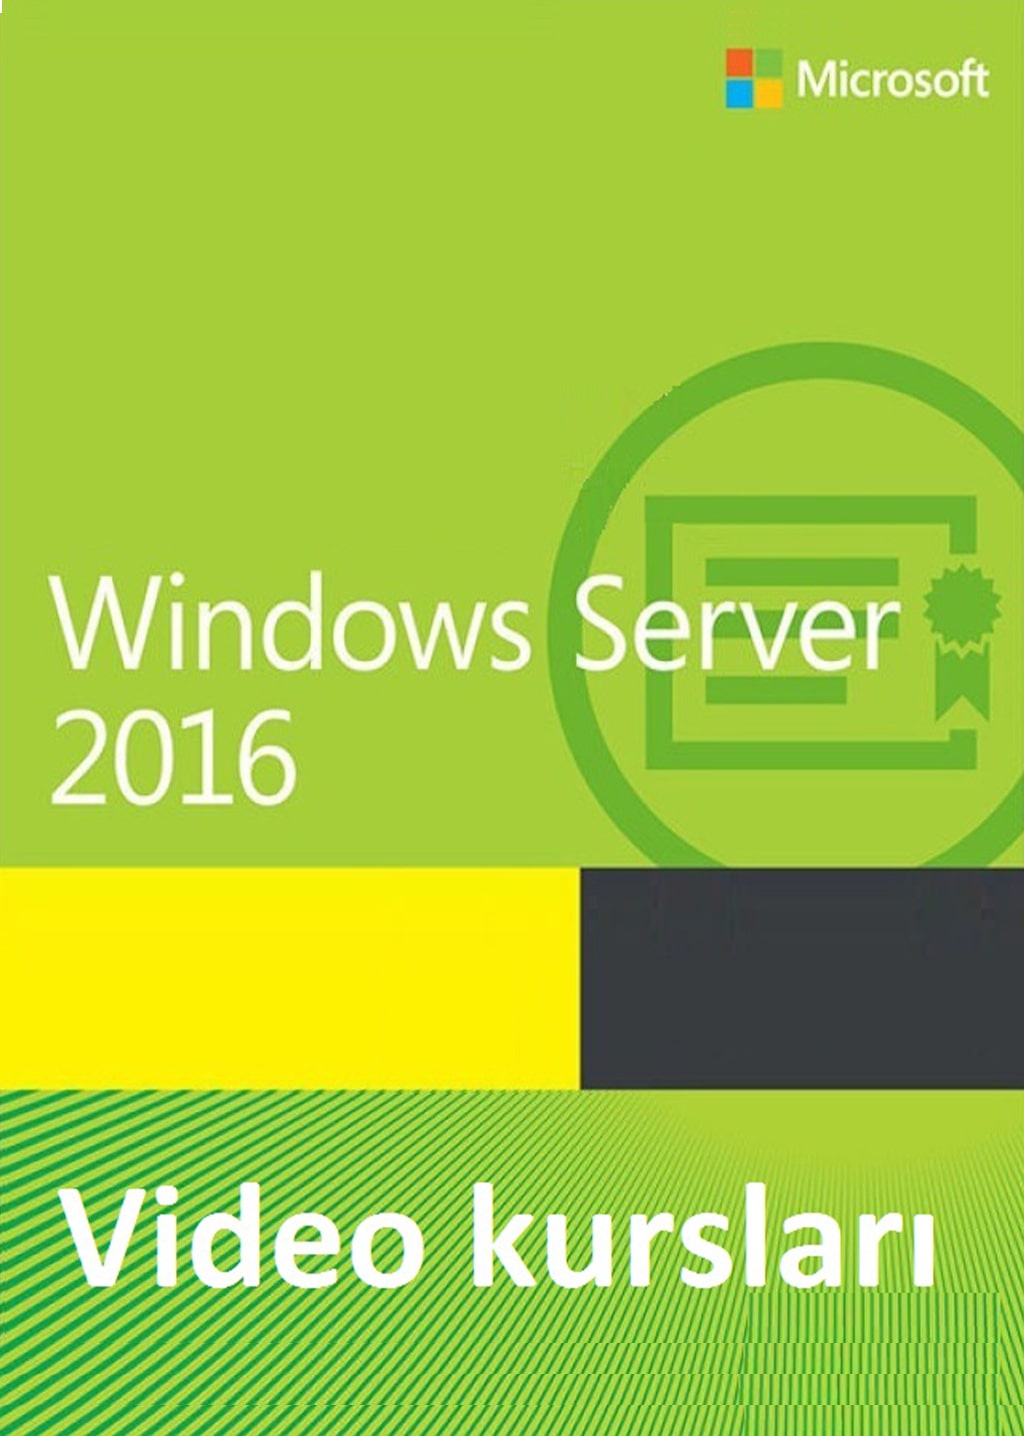 Windows Server video kurslari